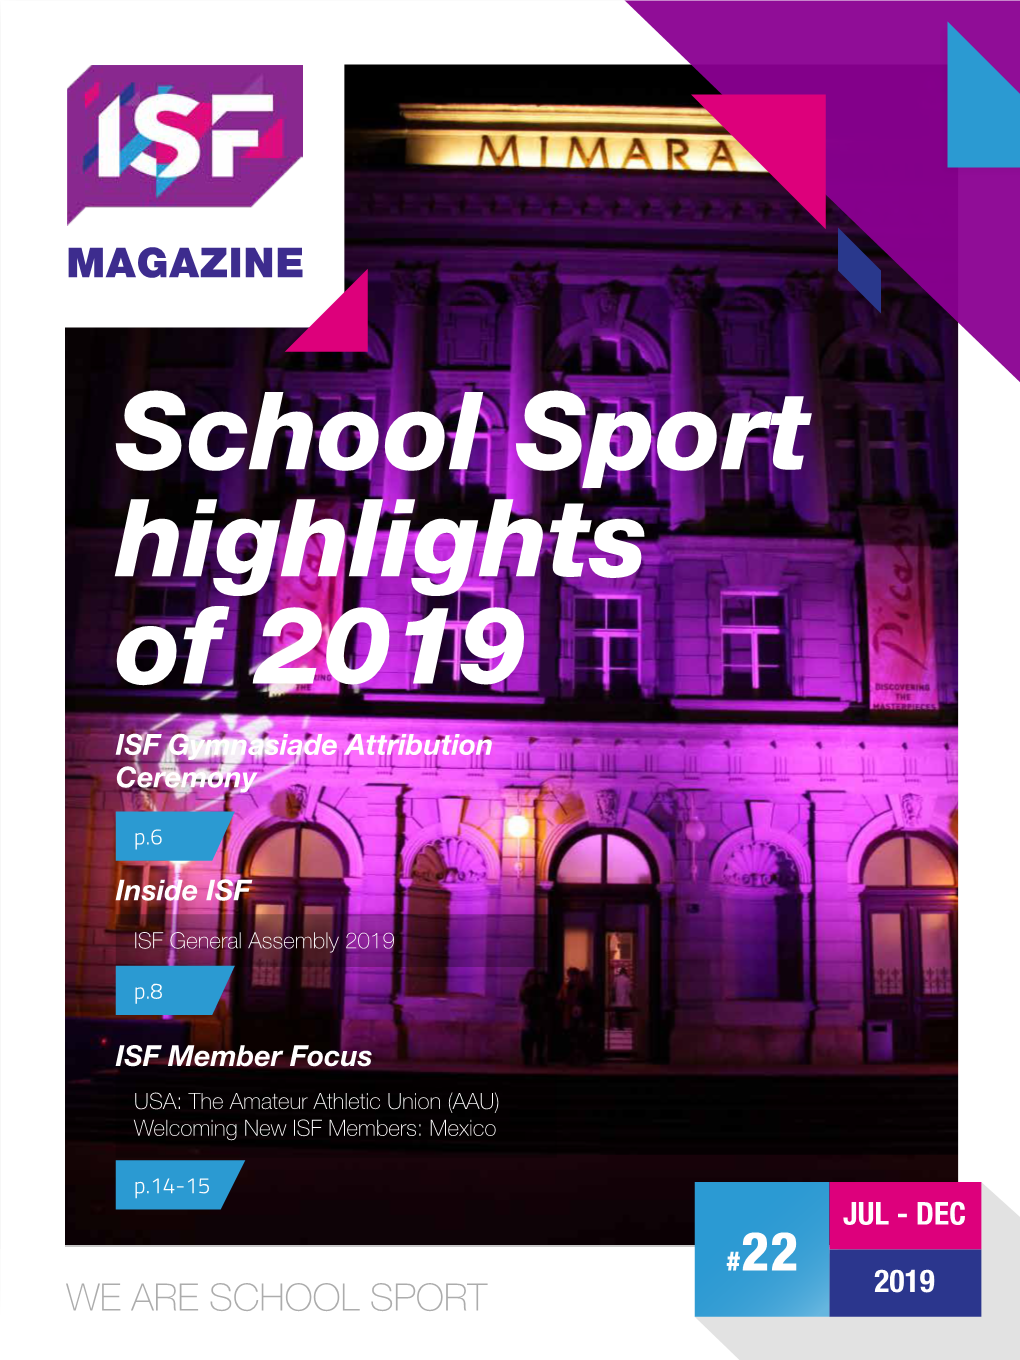 School Sport Highlights of 2019 ISF Gymnasiade Attribution Ceremony